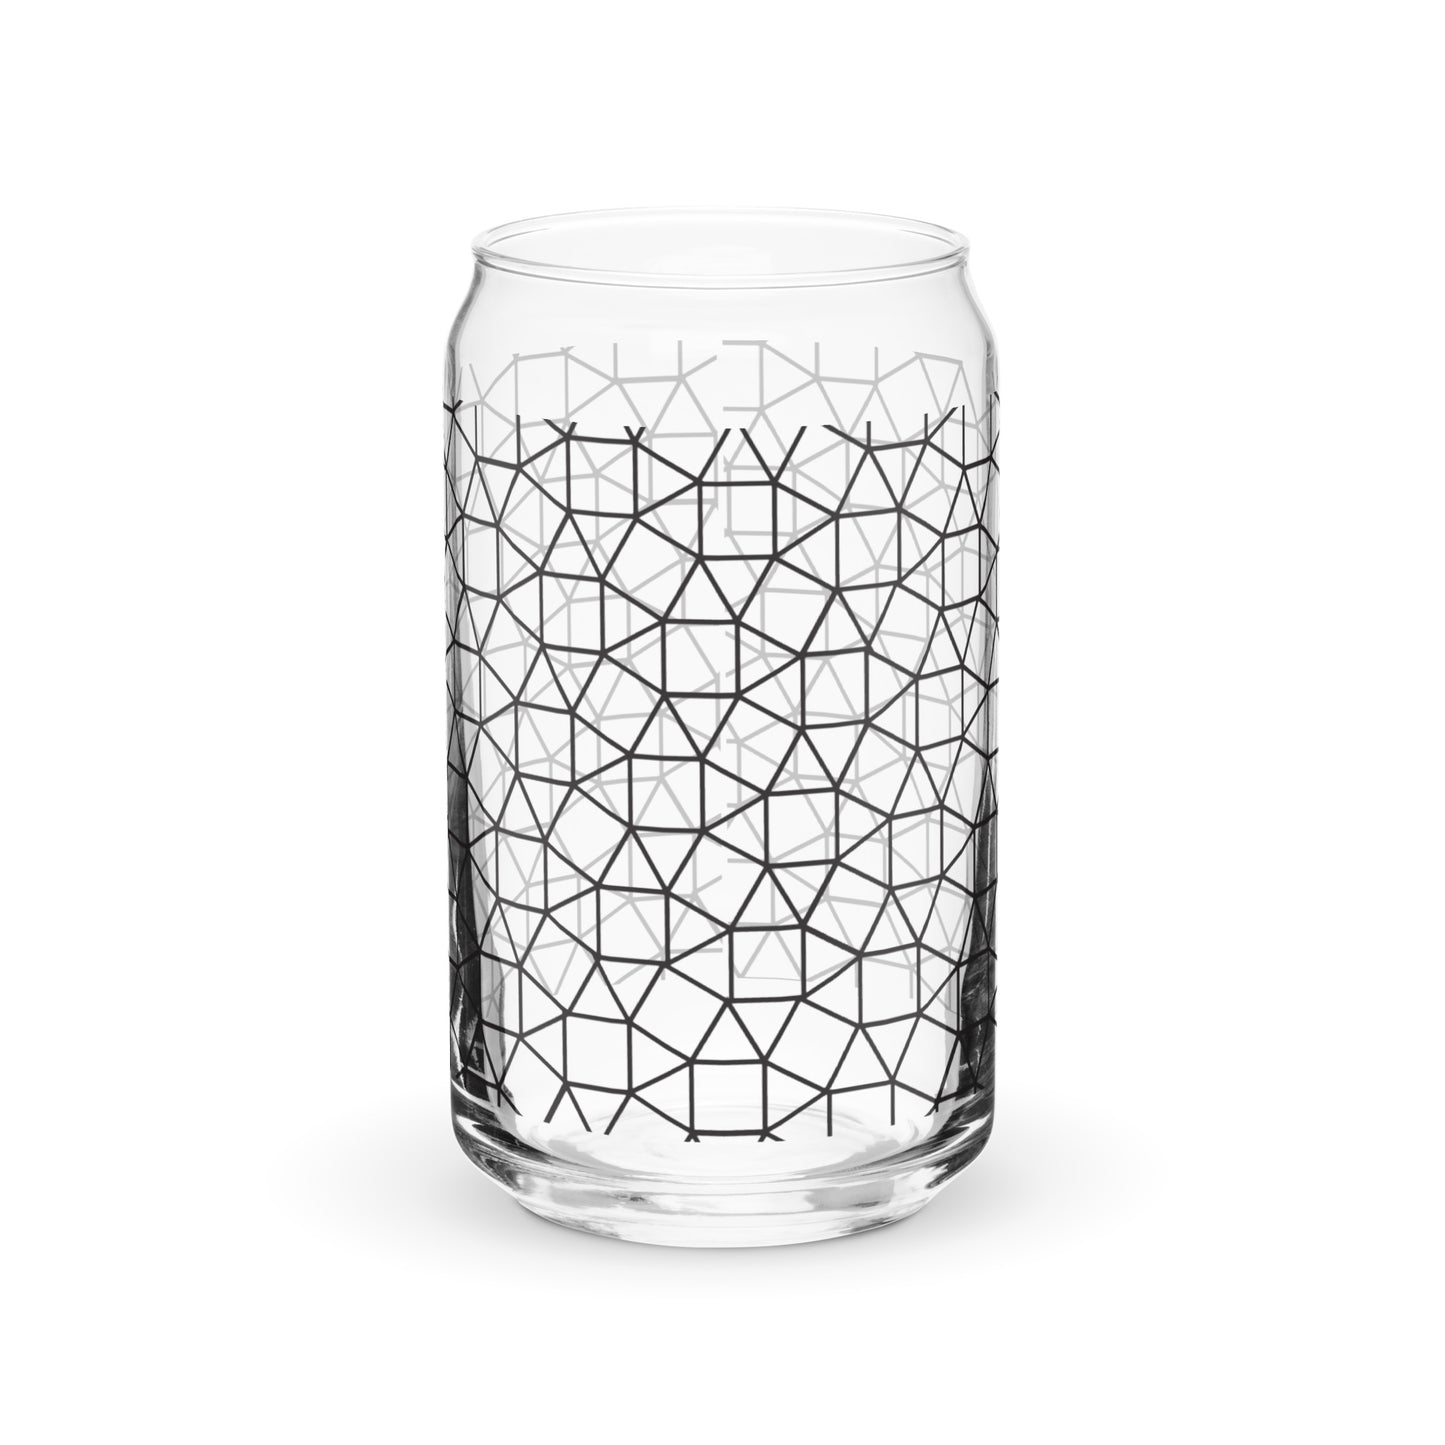 Tiling the Glass .:. Semi-Regular Tesselation #5 (black)